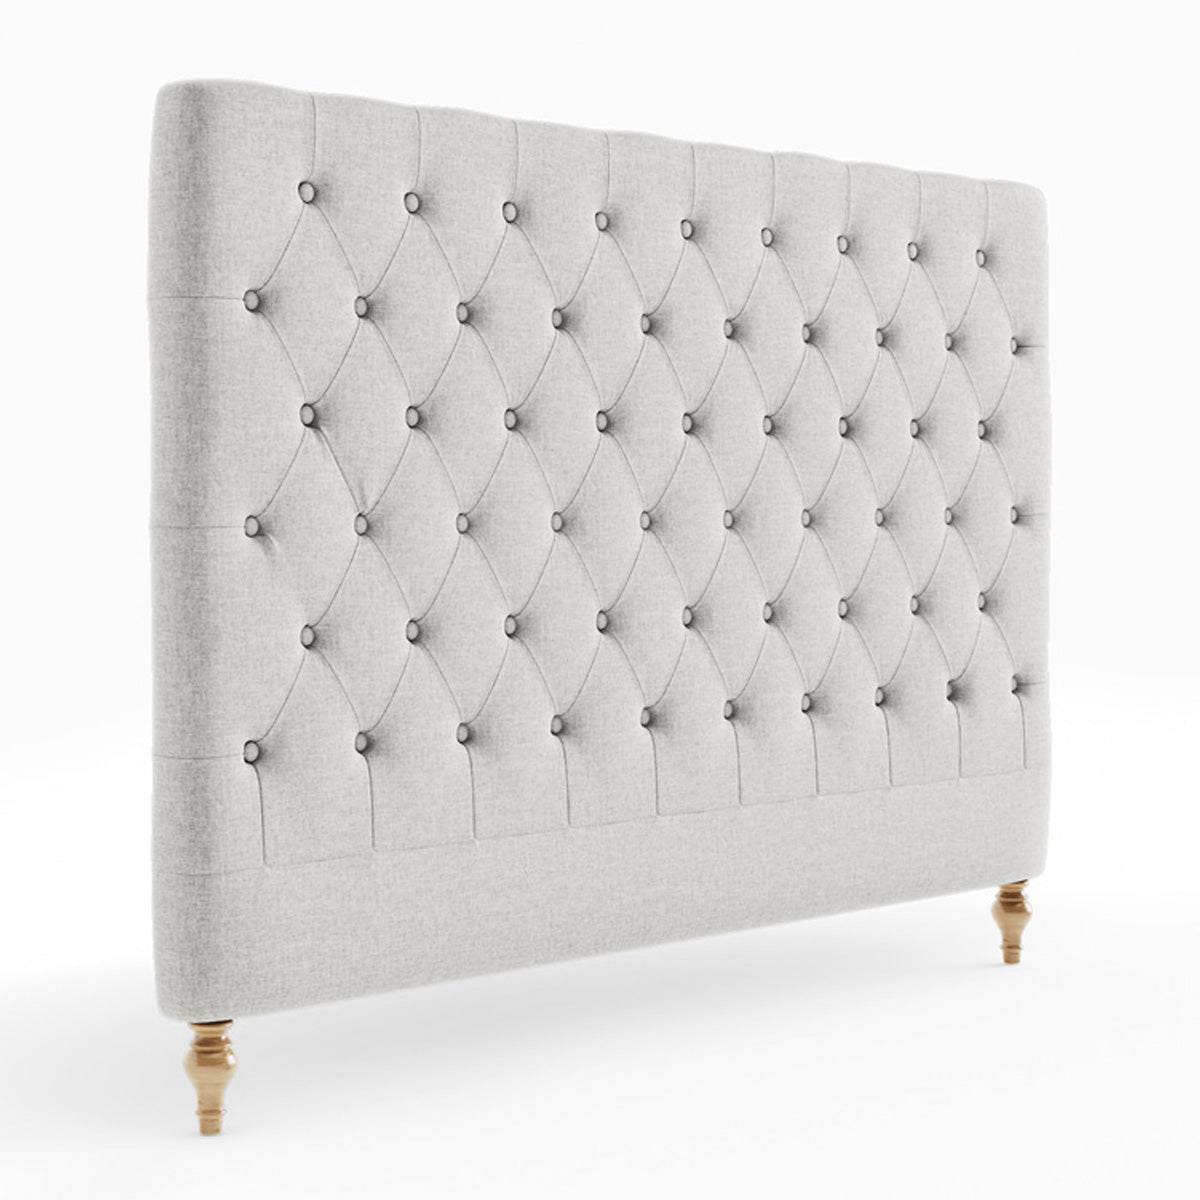 Waldorf Upholstered Fabric Bedhead (Stone)